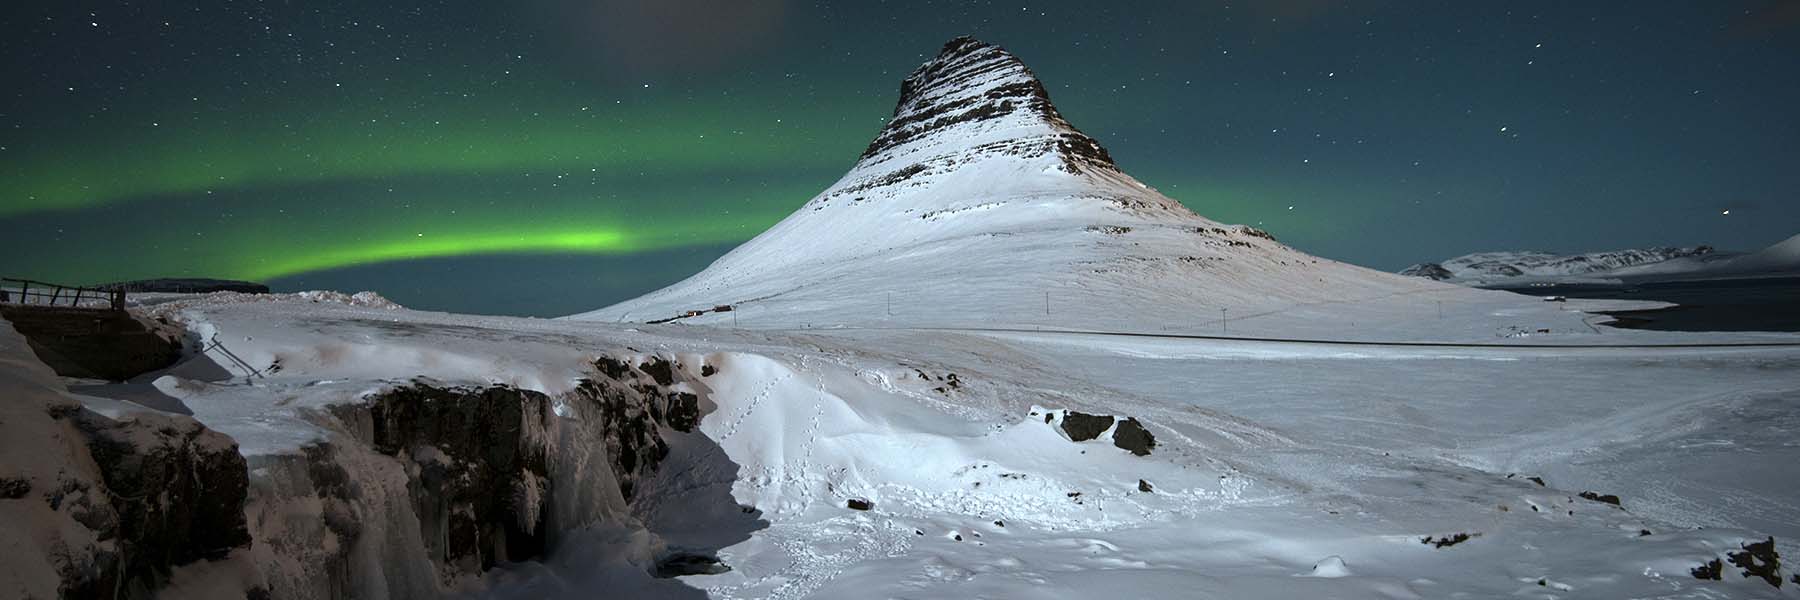 Best Iceland Winter Tours 